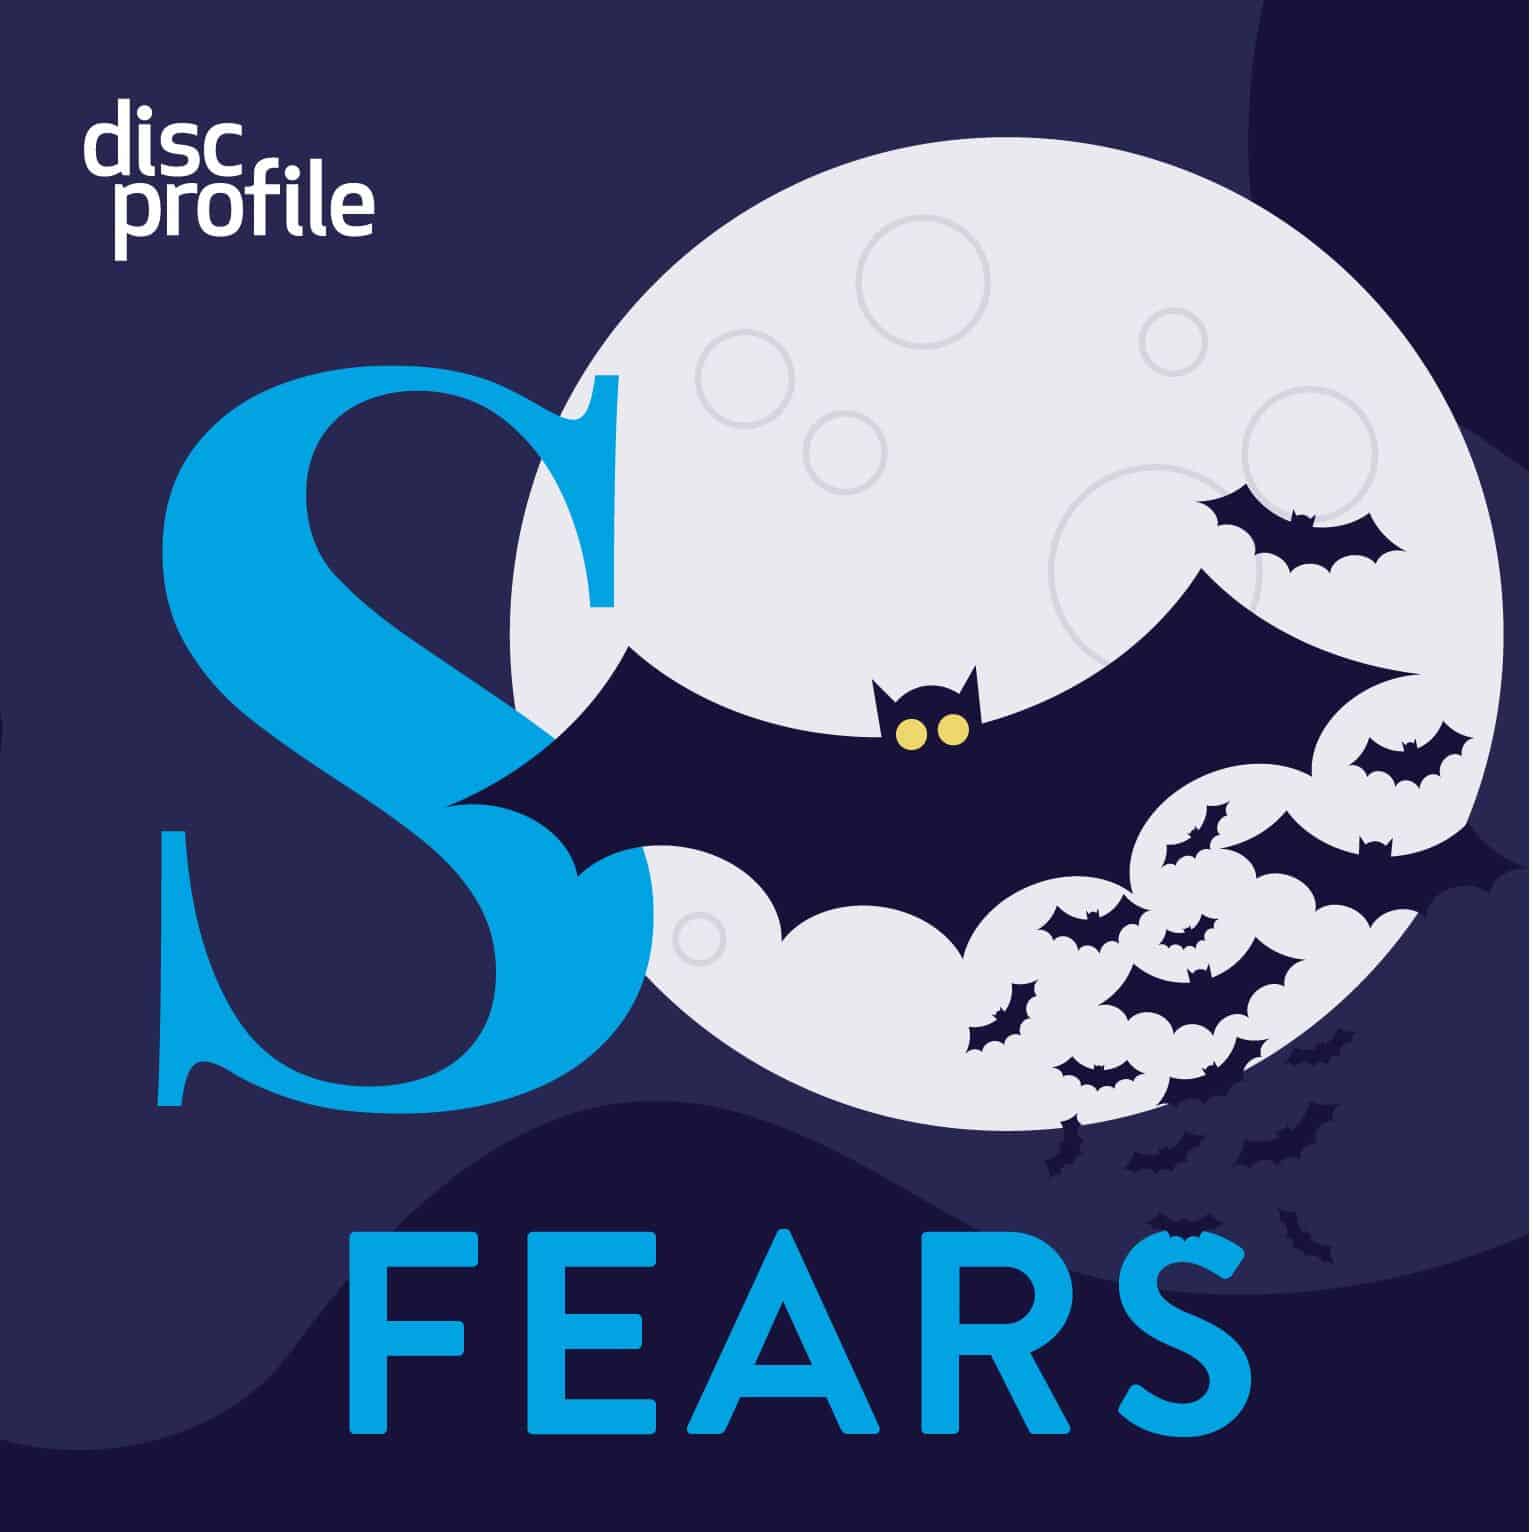 S fears (image of bats)